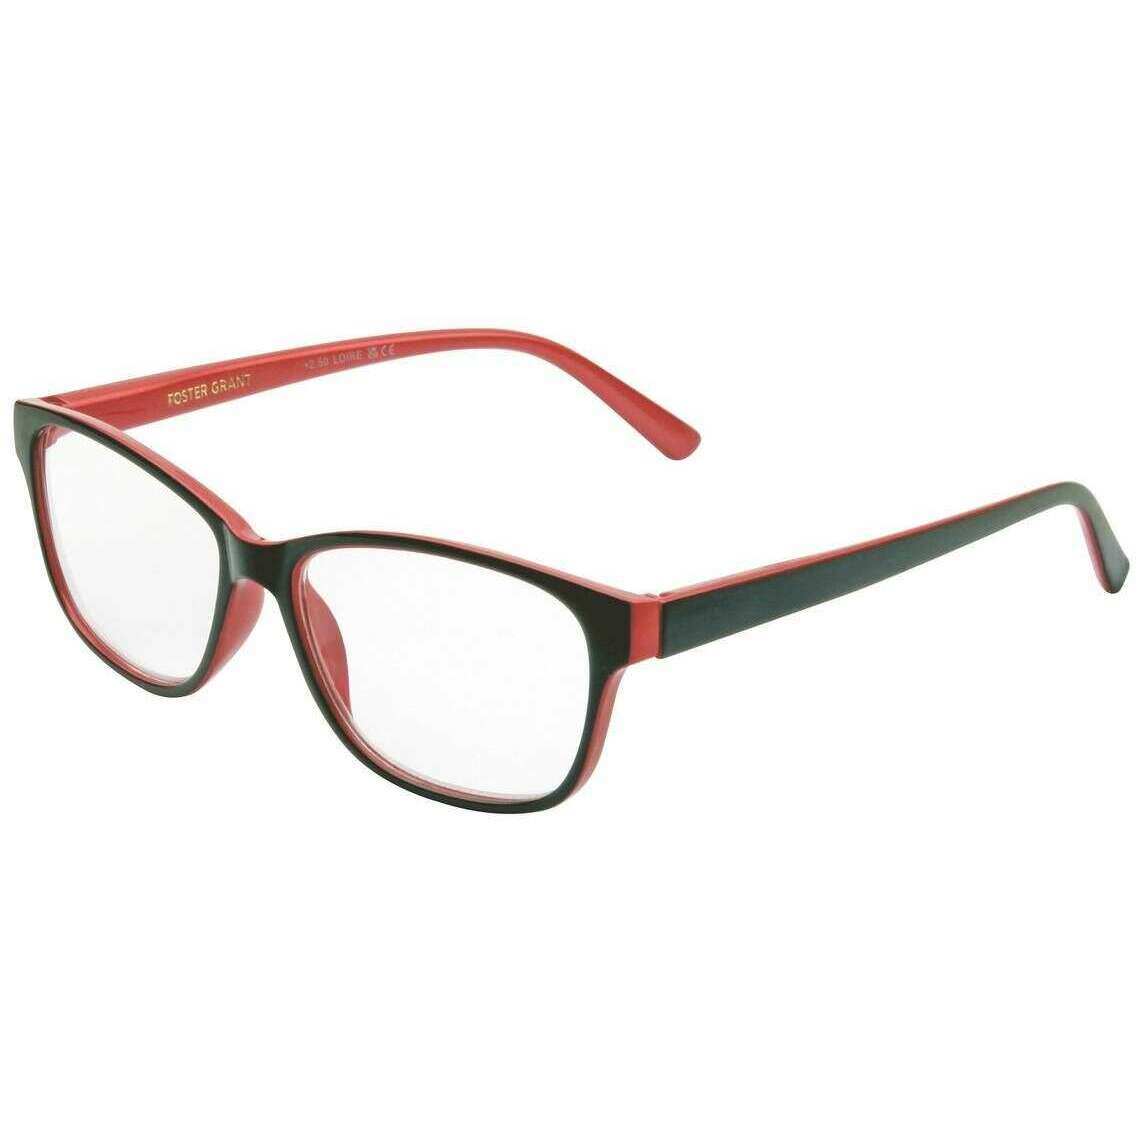 Foster Grant Loire Reading Glasses - Shiny Black/Metallic Red